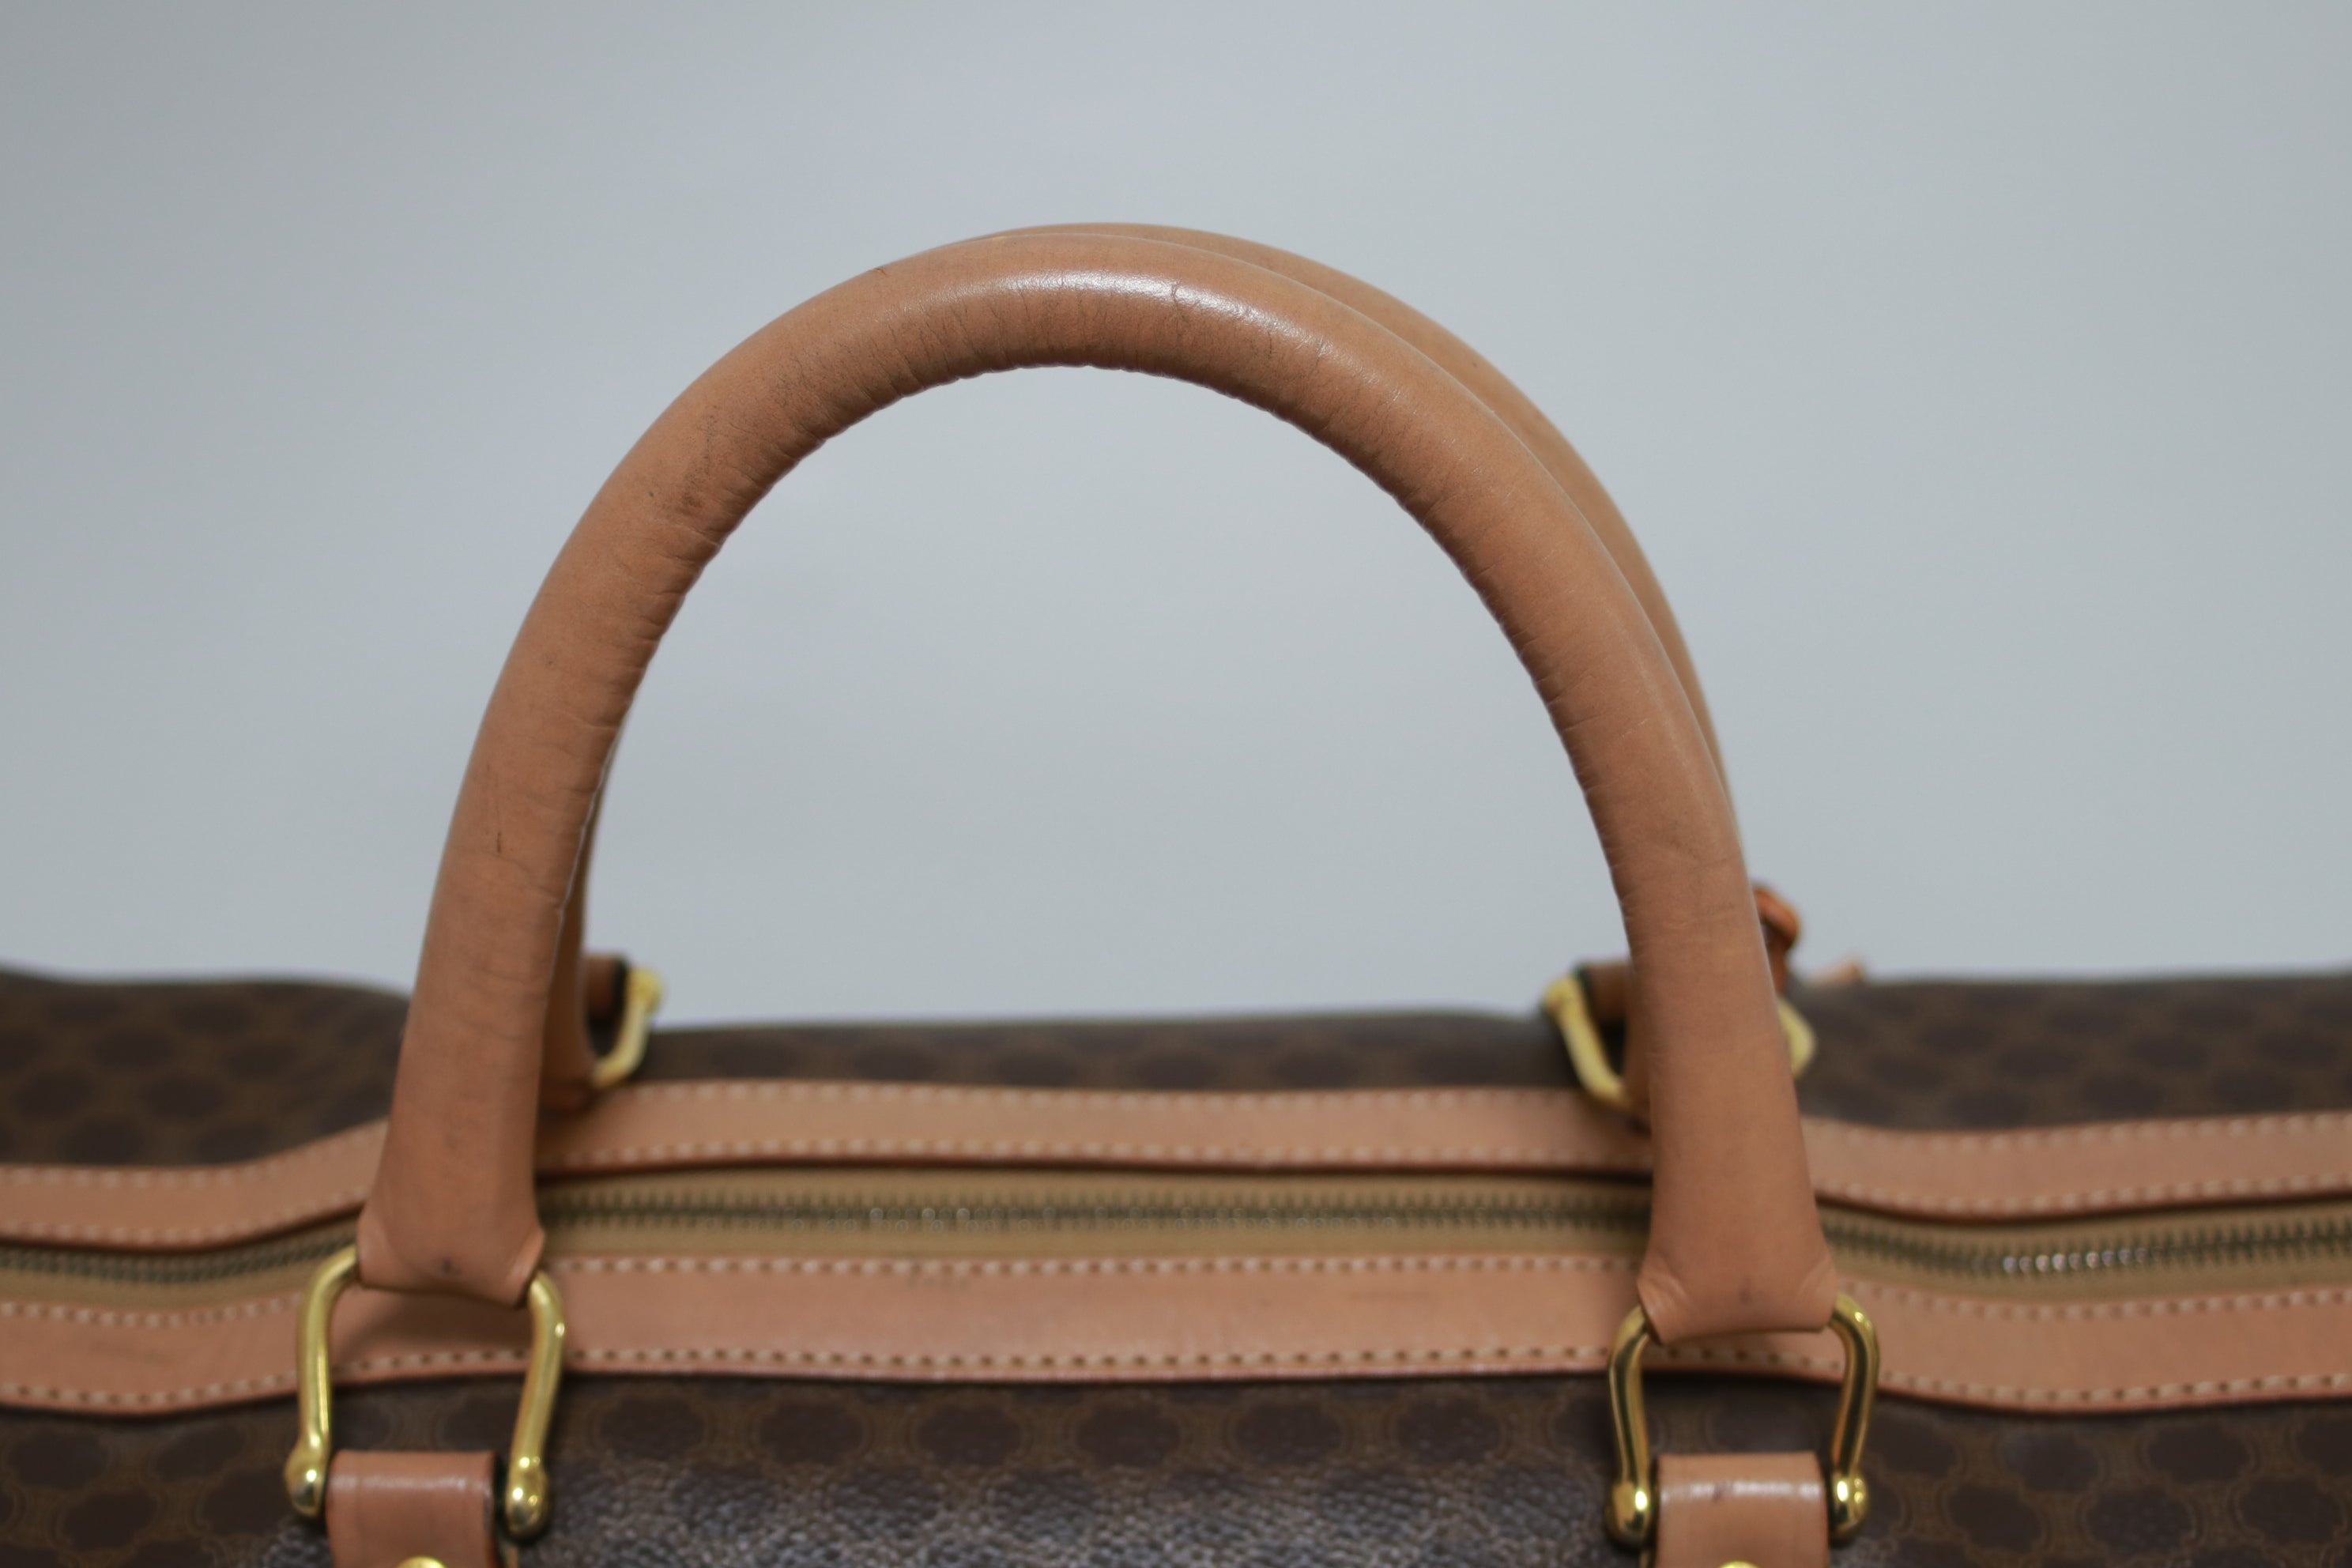 Celine Macadam Duffle Bag Used (7807)